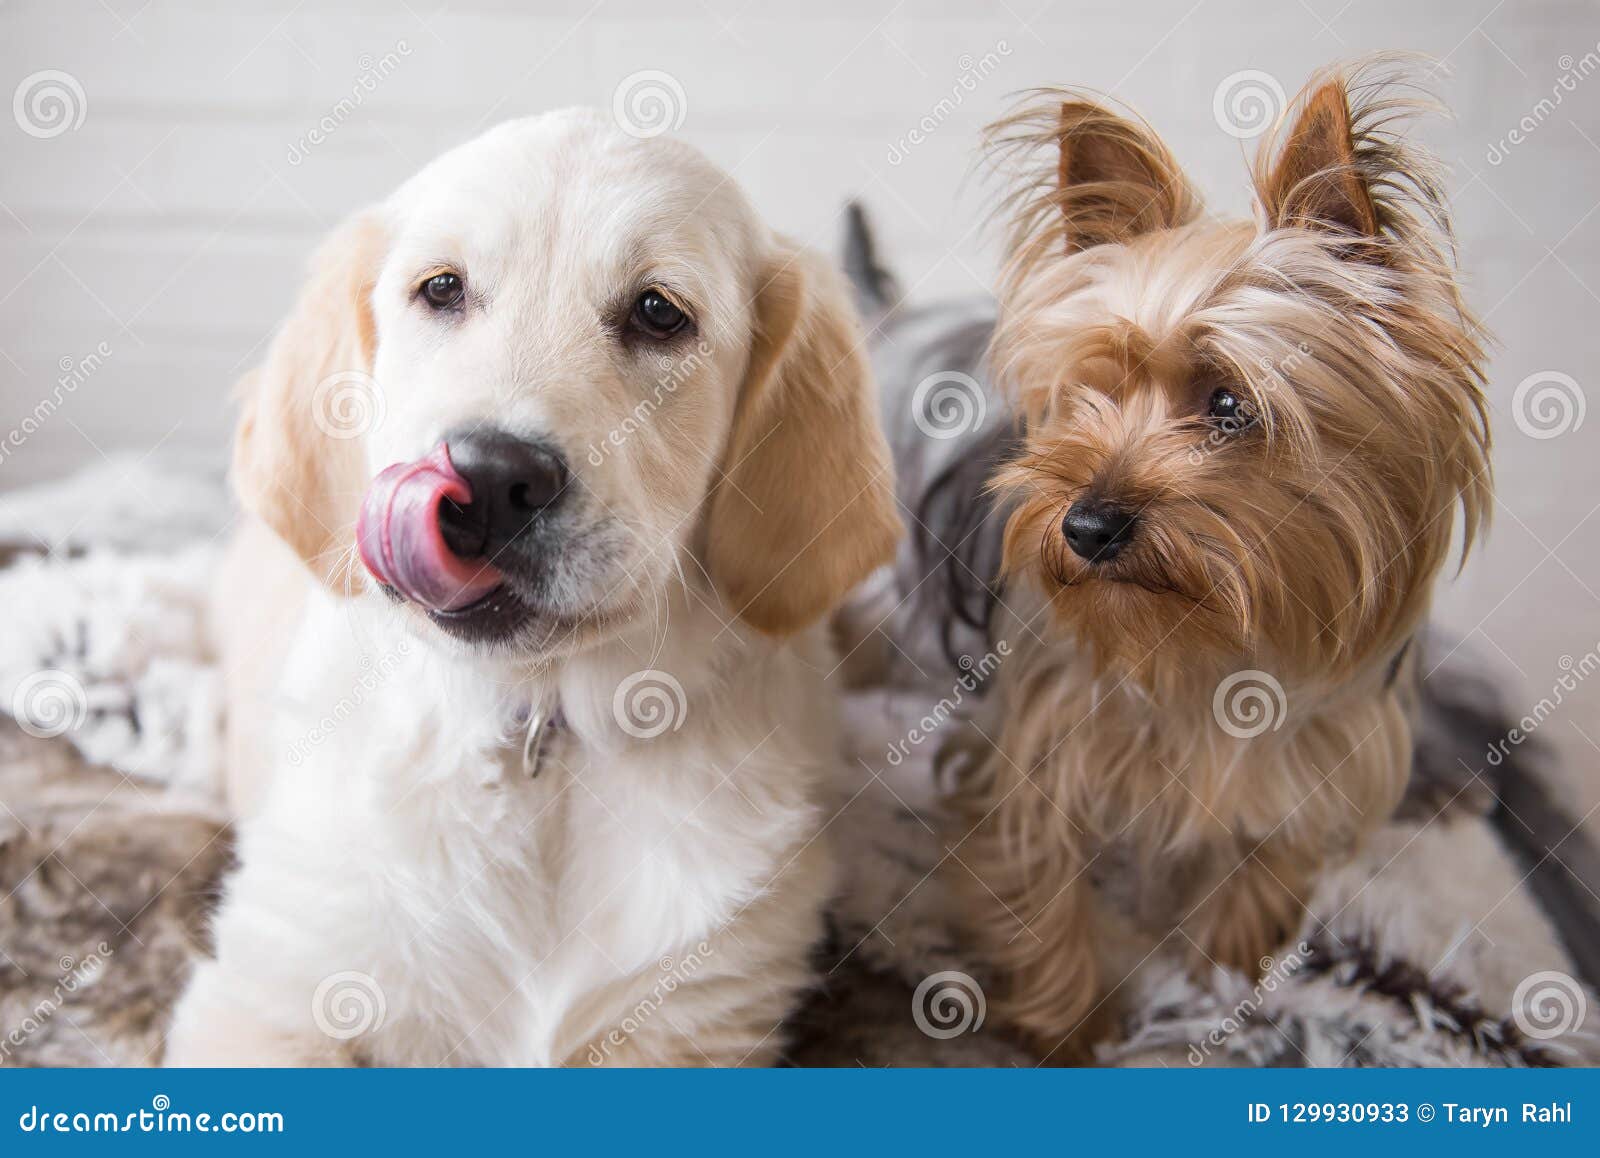 Female Golden Retriever Puppy Dog With 